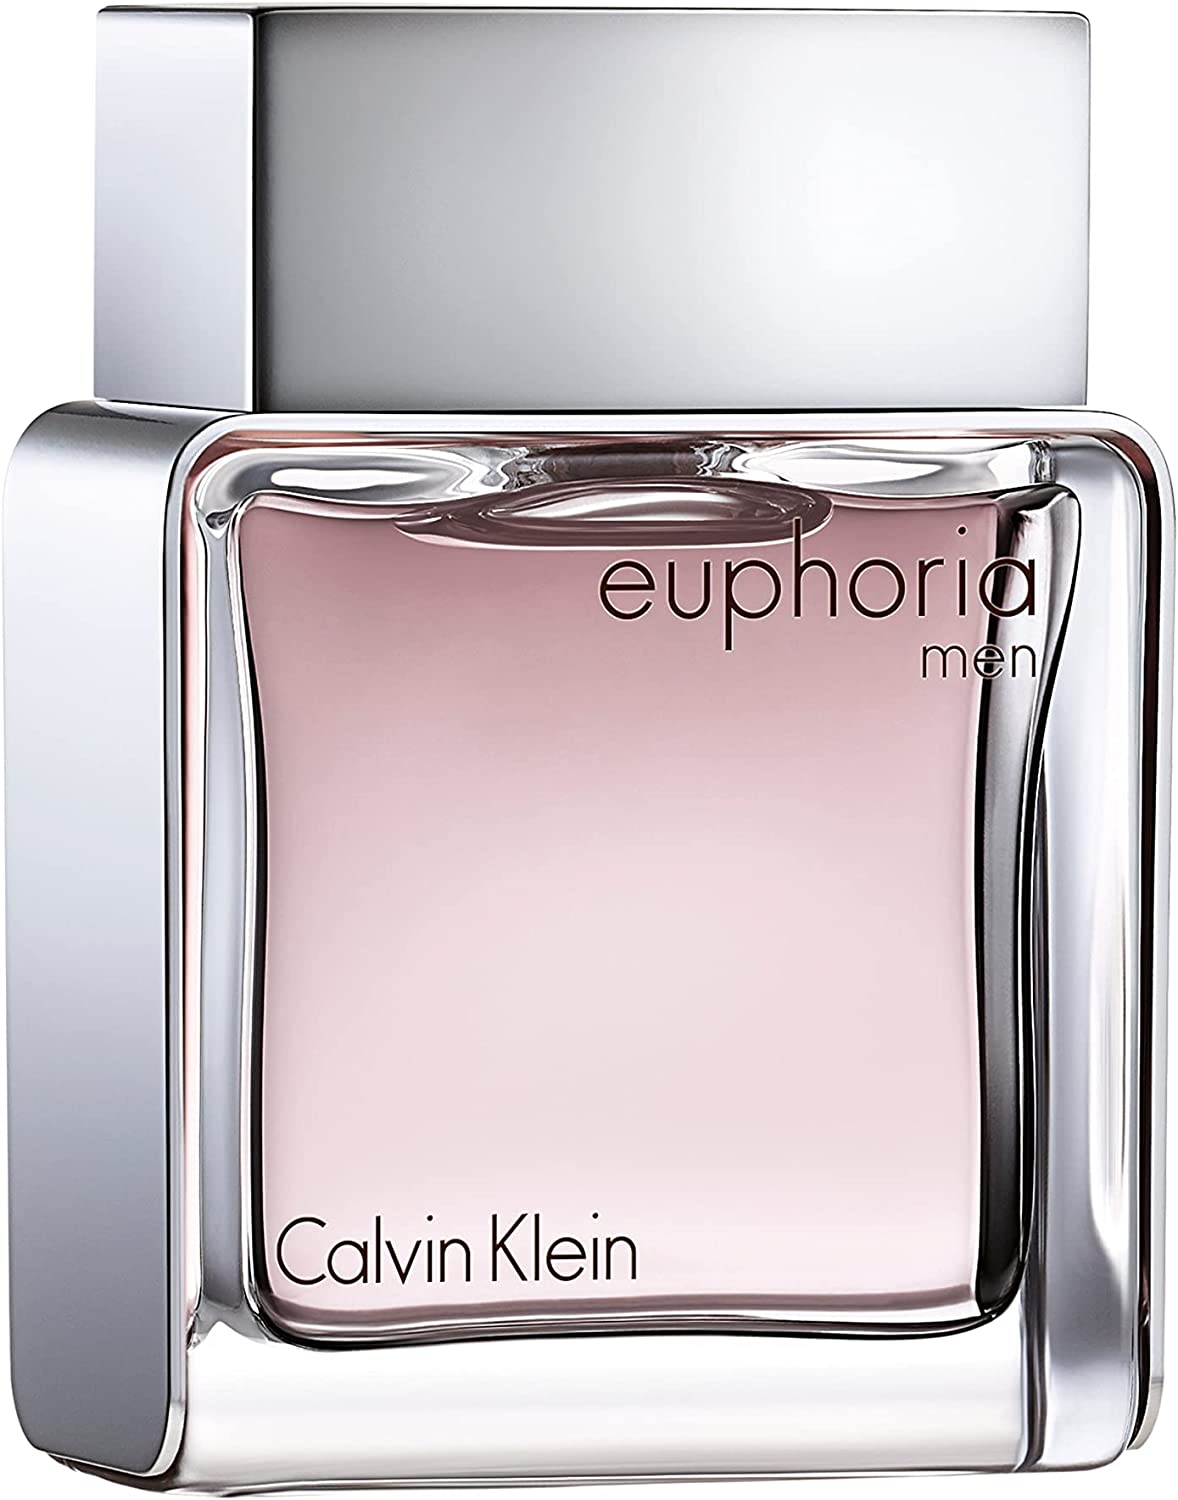 Euphoria by Calvin Klein Eau de Toilette for Men, 100 ml - Dirhami